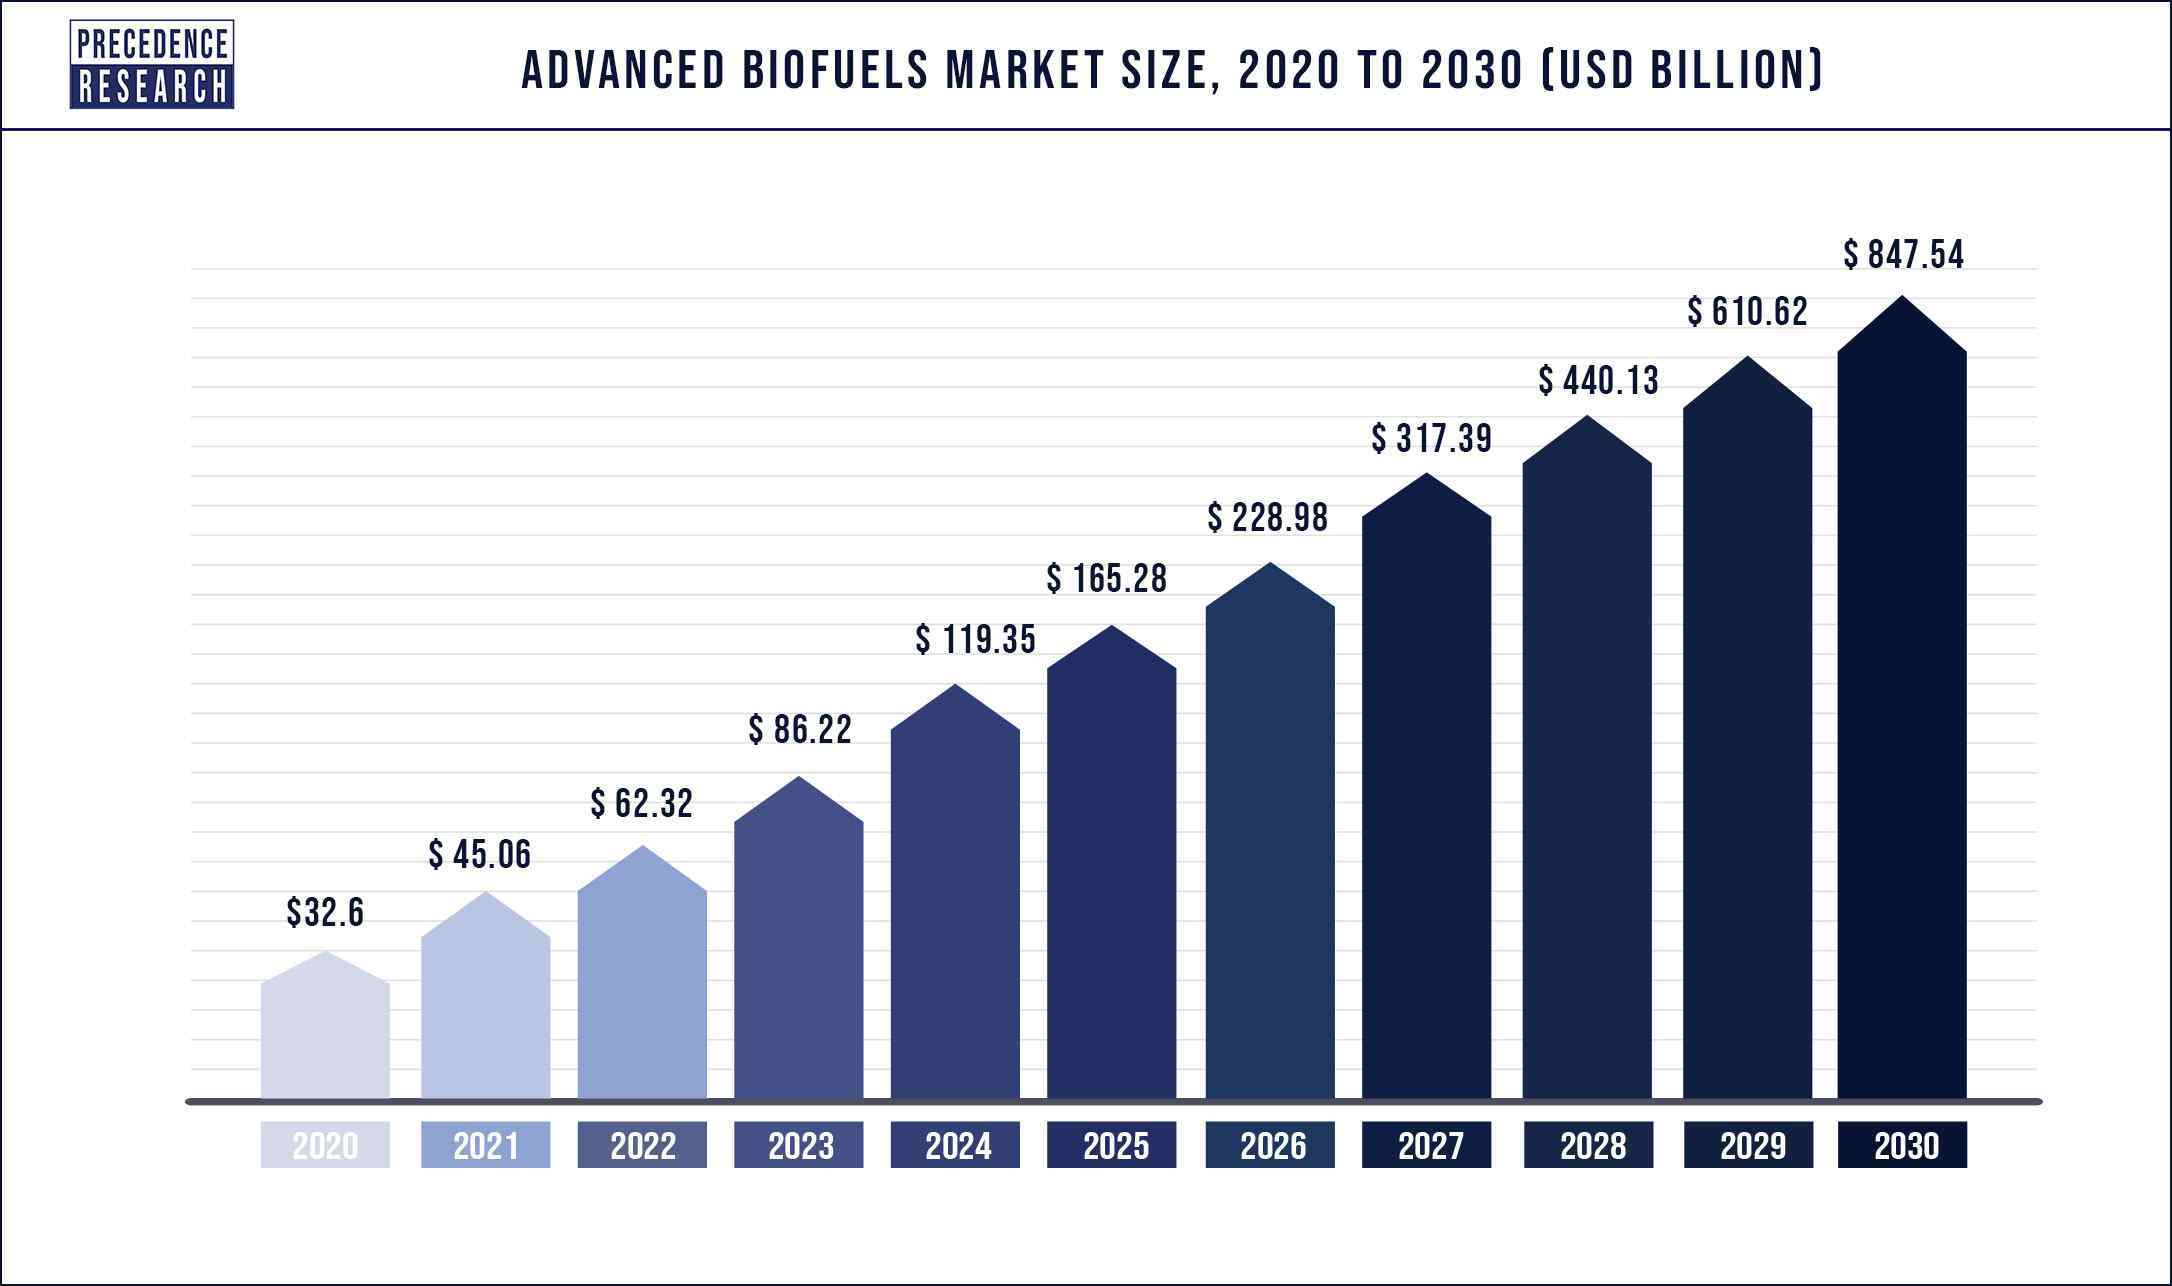 Advanced Biofuels Market Size By 2030